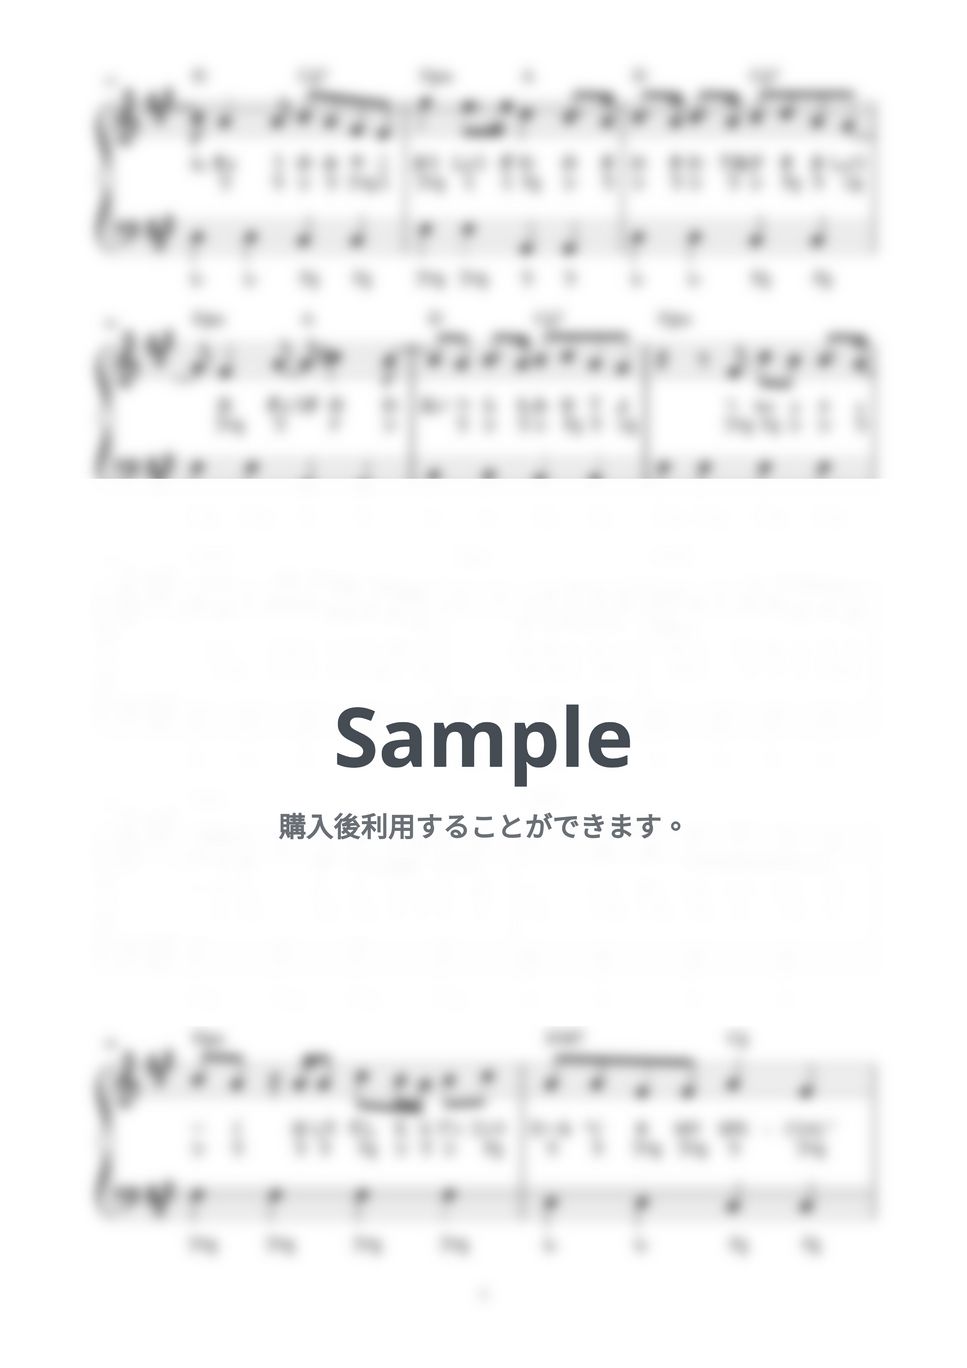 King Gnu - SPECIALZ (かんたん / 歌詞付き / ドレミ付き / 初心者) by piano.tokyo